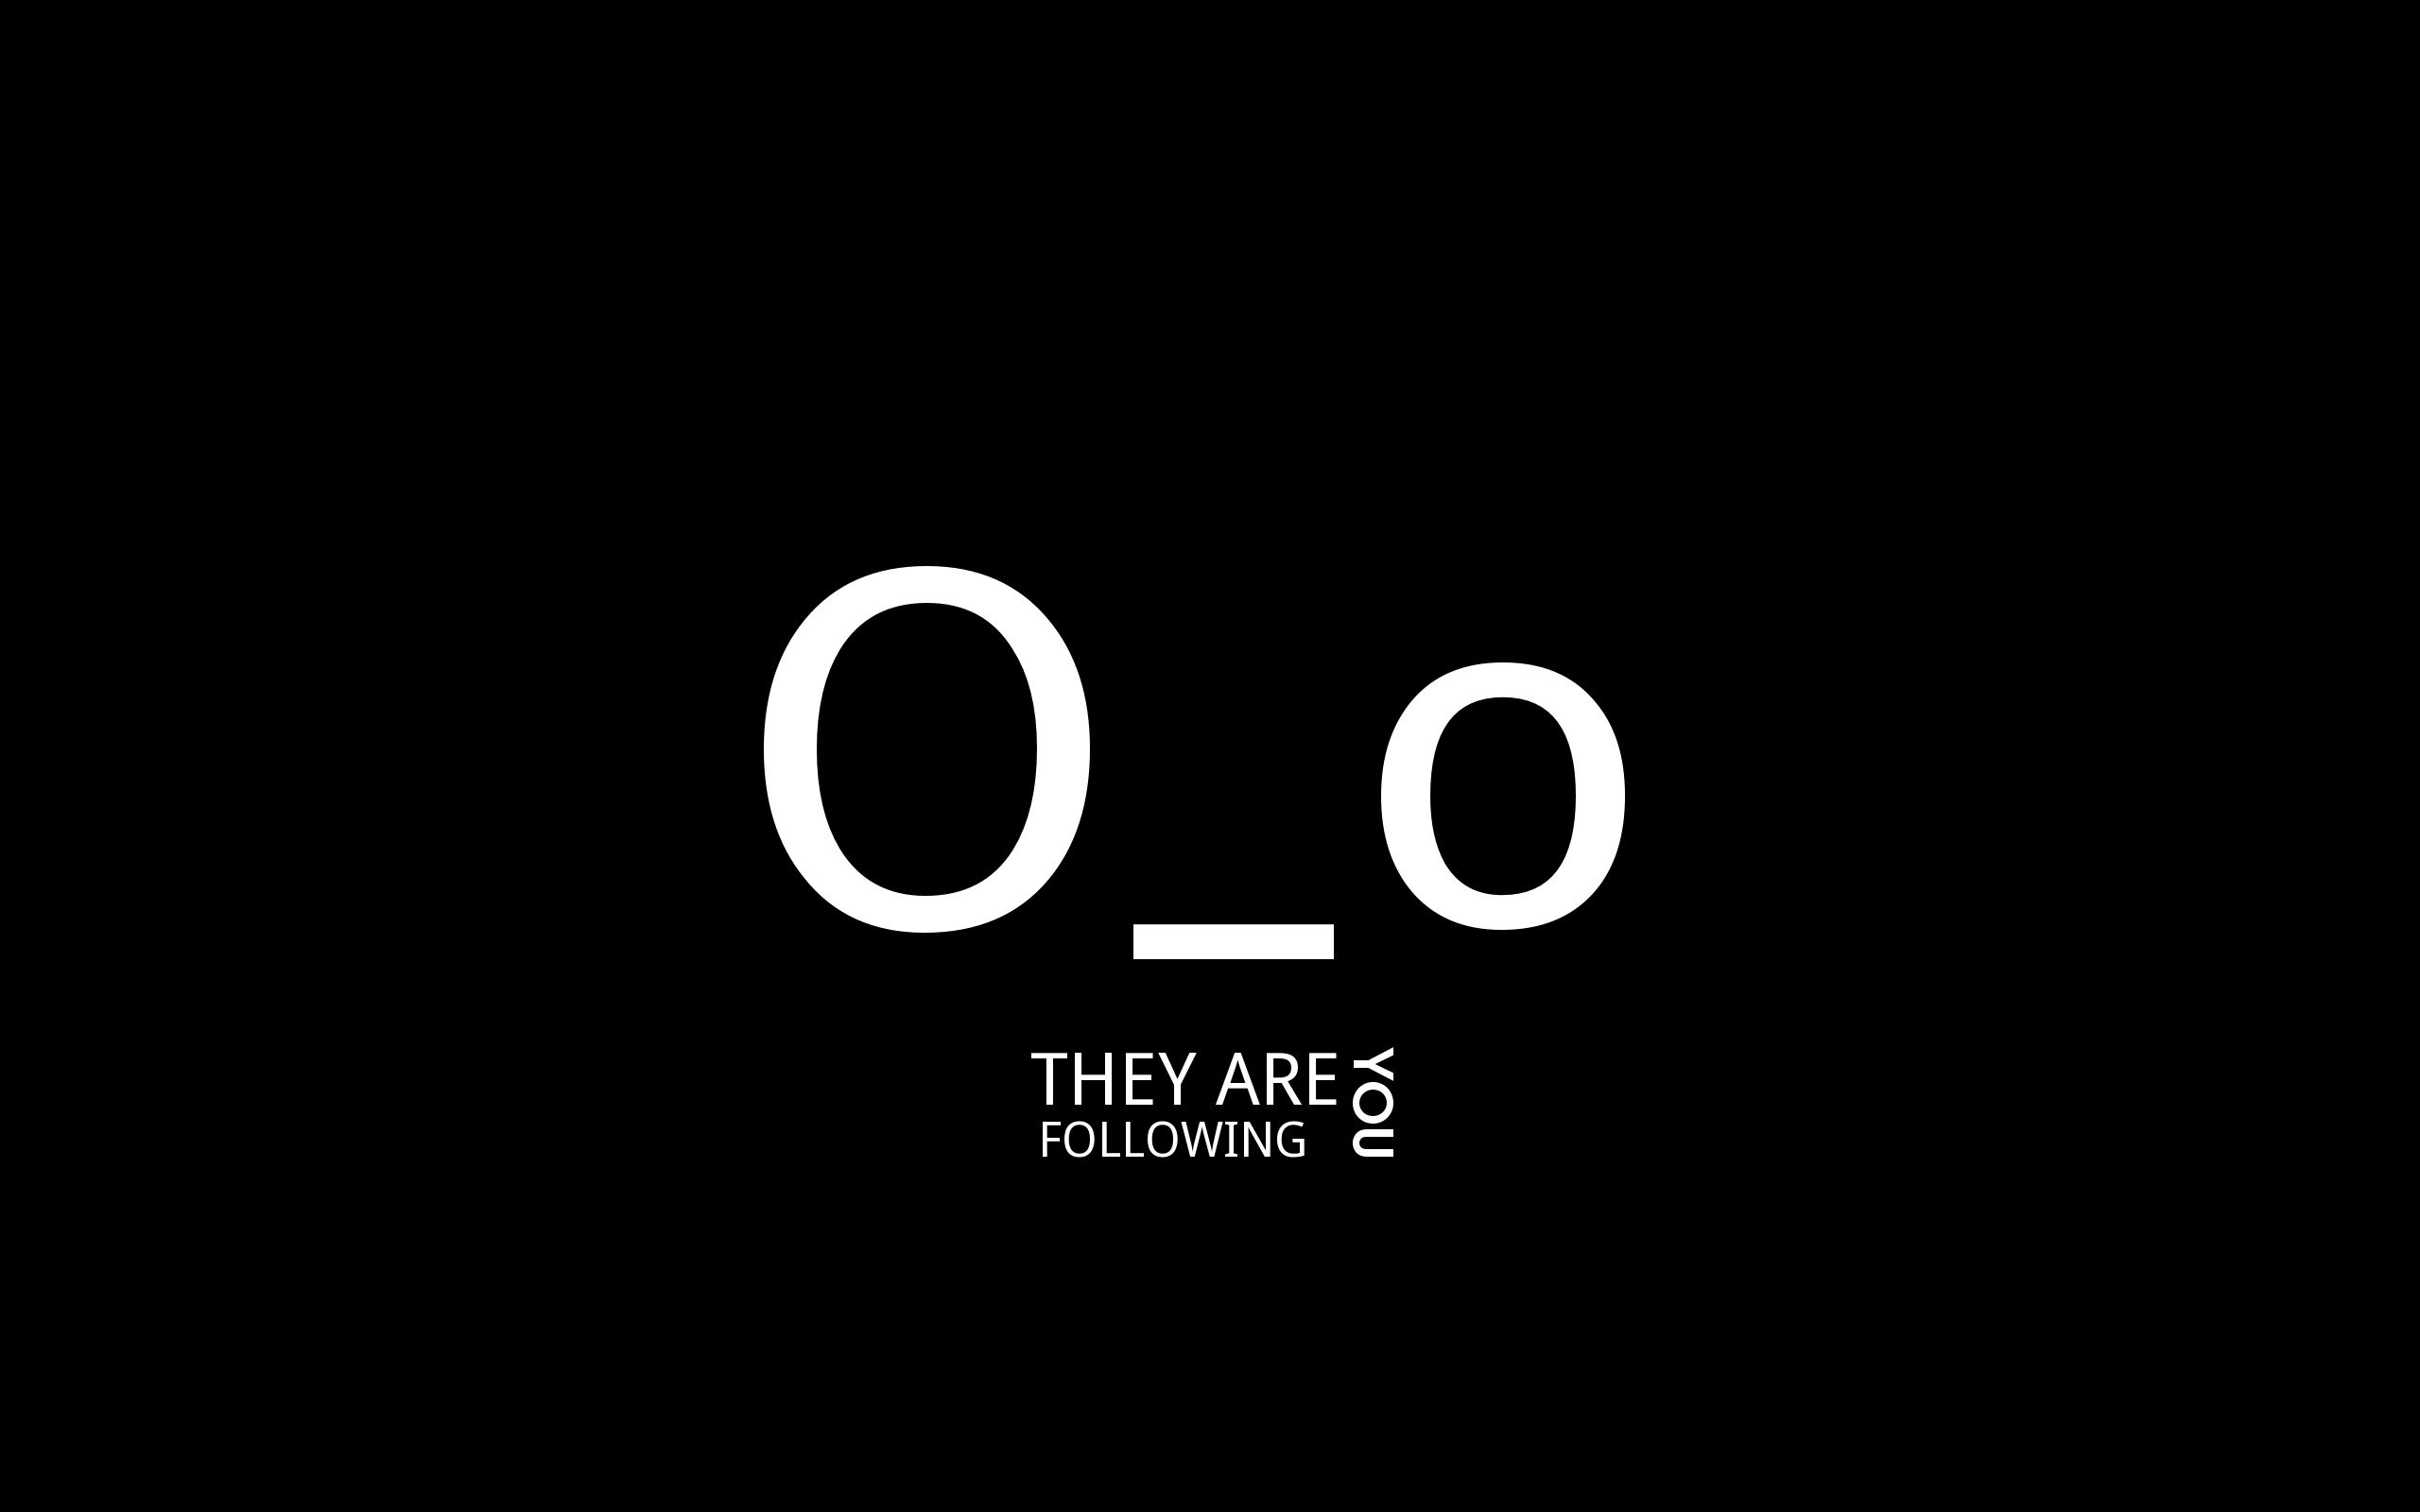 o_o, minimalism, black, follow